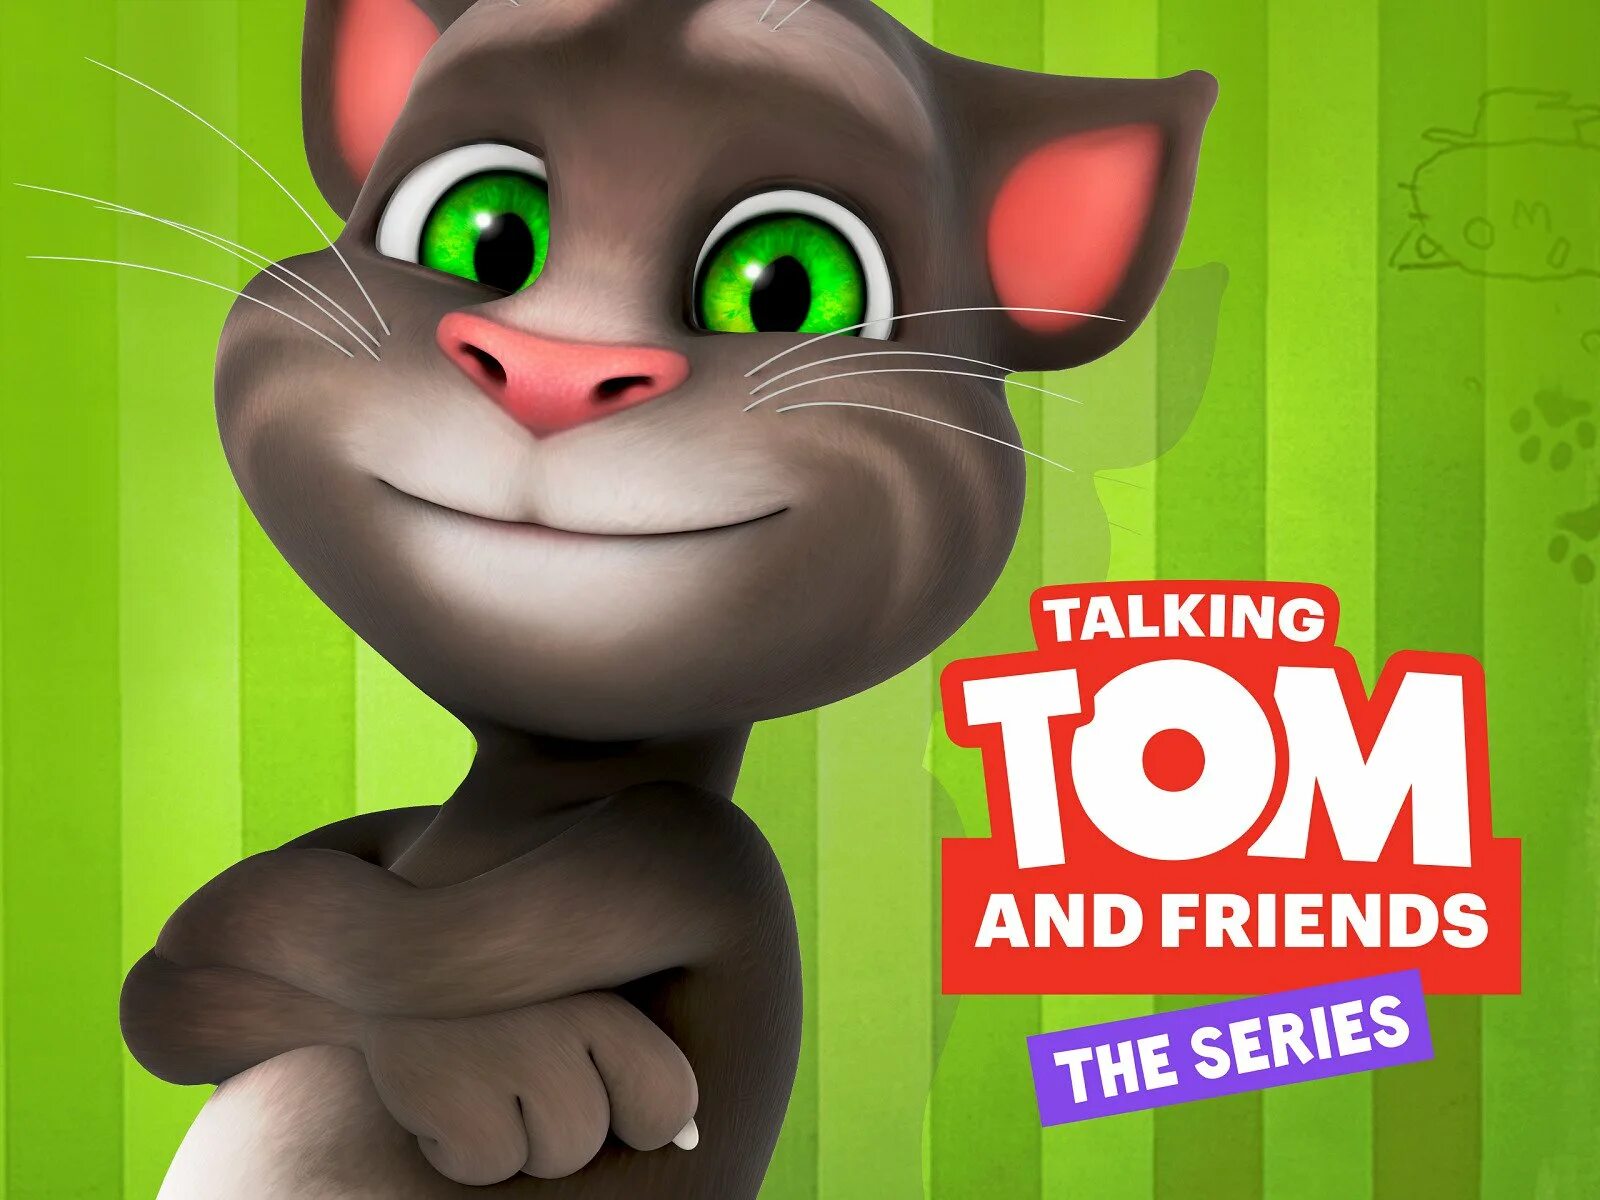 Talking Tom. Том и его друзья. Talking Tom и его друзья. Talking Tom Cat. Talking friends com